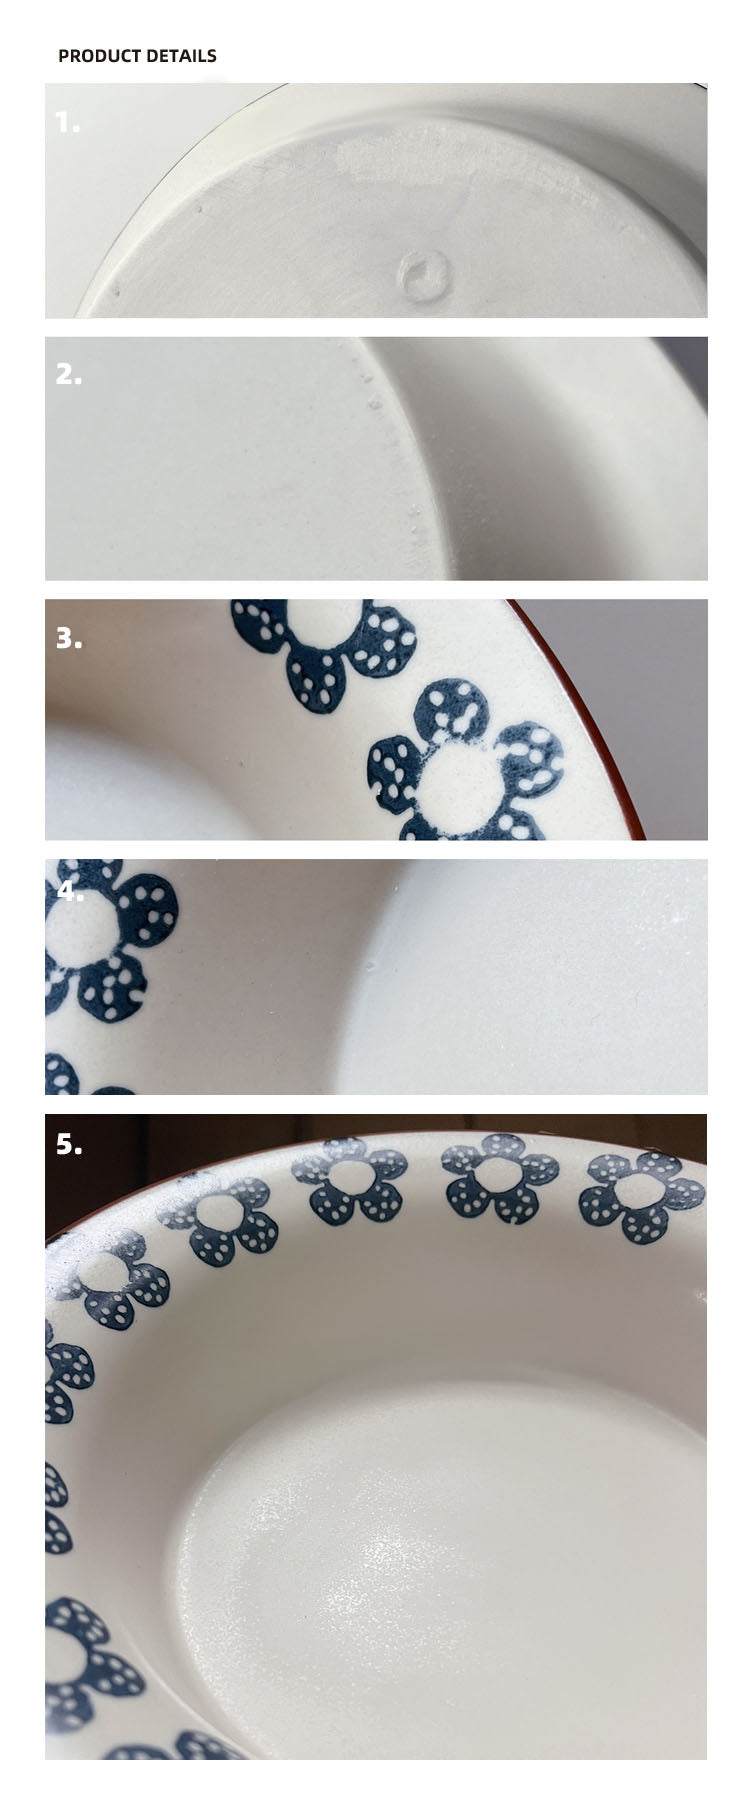 Flower Ceramic Bowl from maija